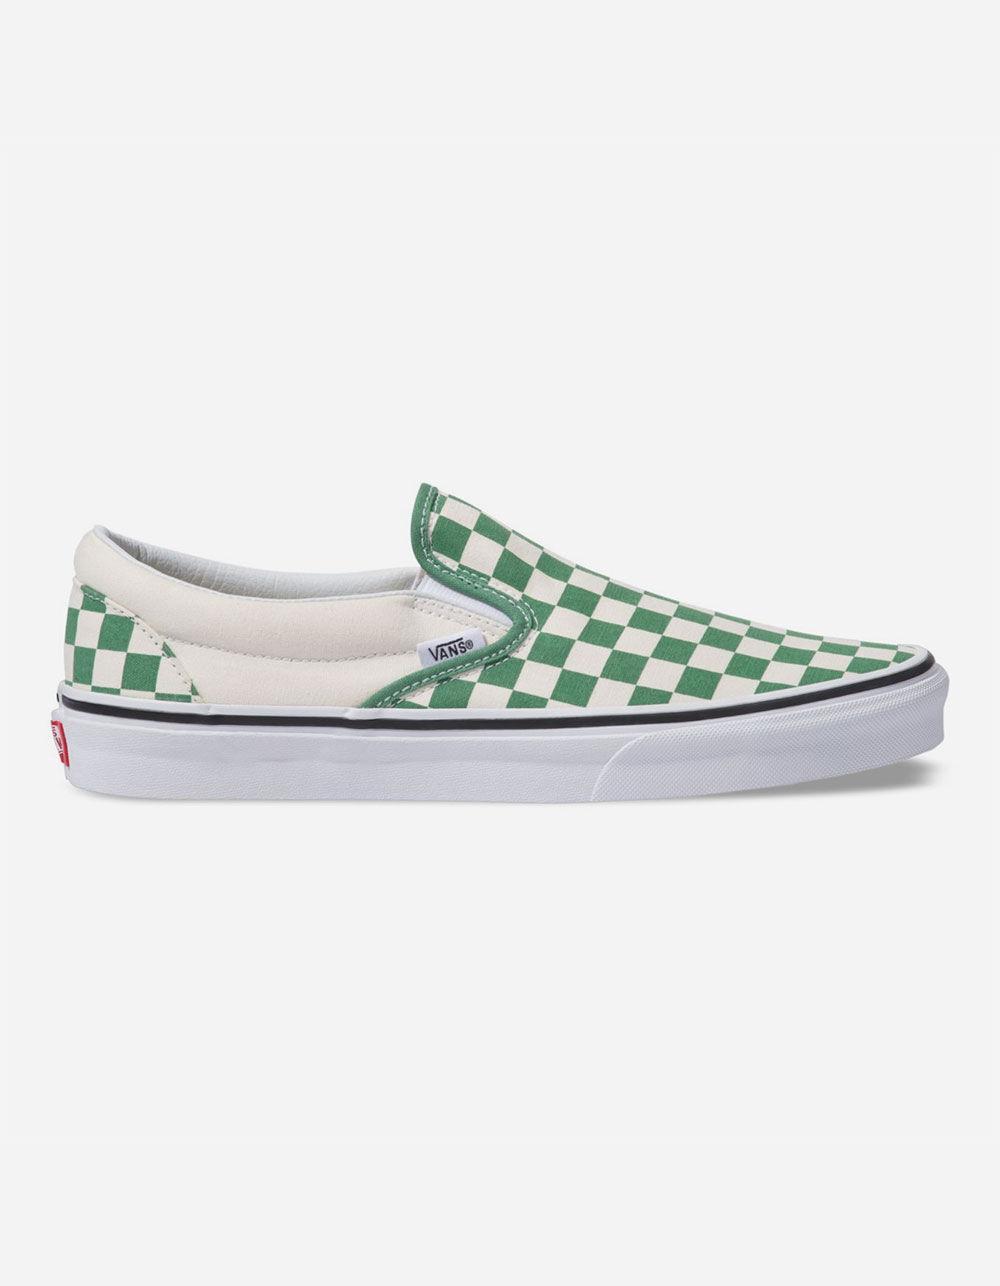 Vans Canvas Classic Slip-on Deep Grass Green Shoes for Men - Lyst